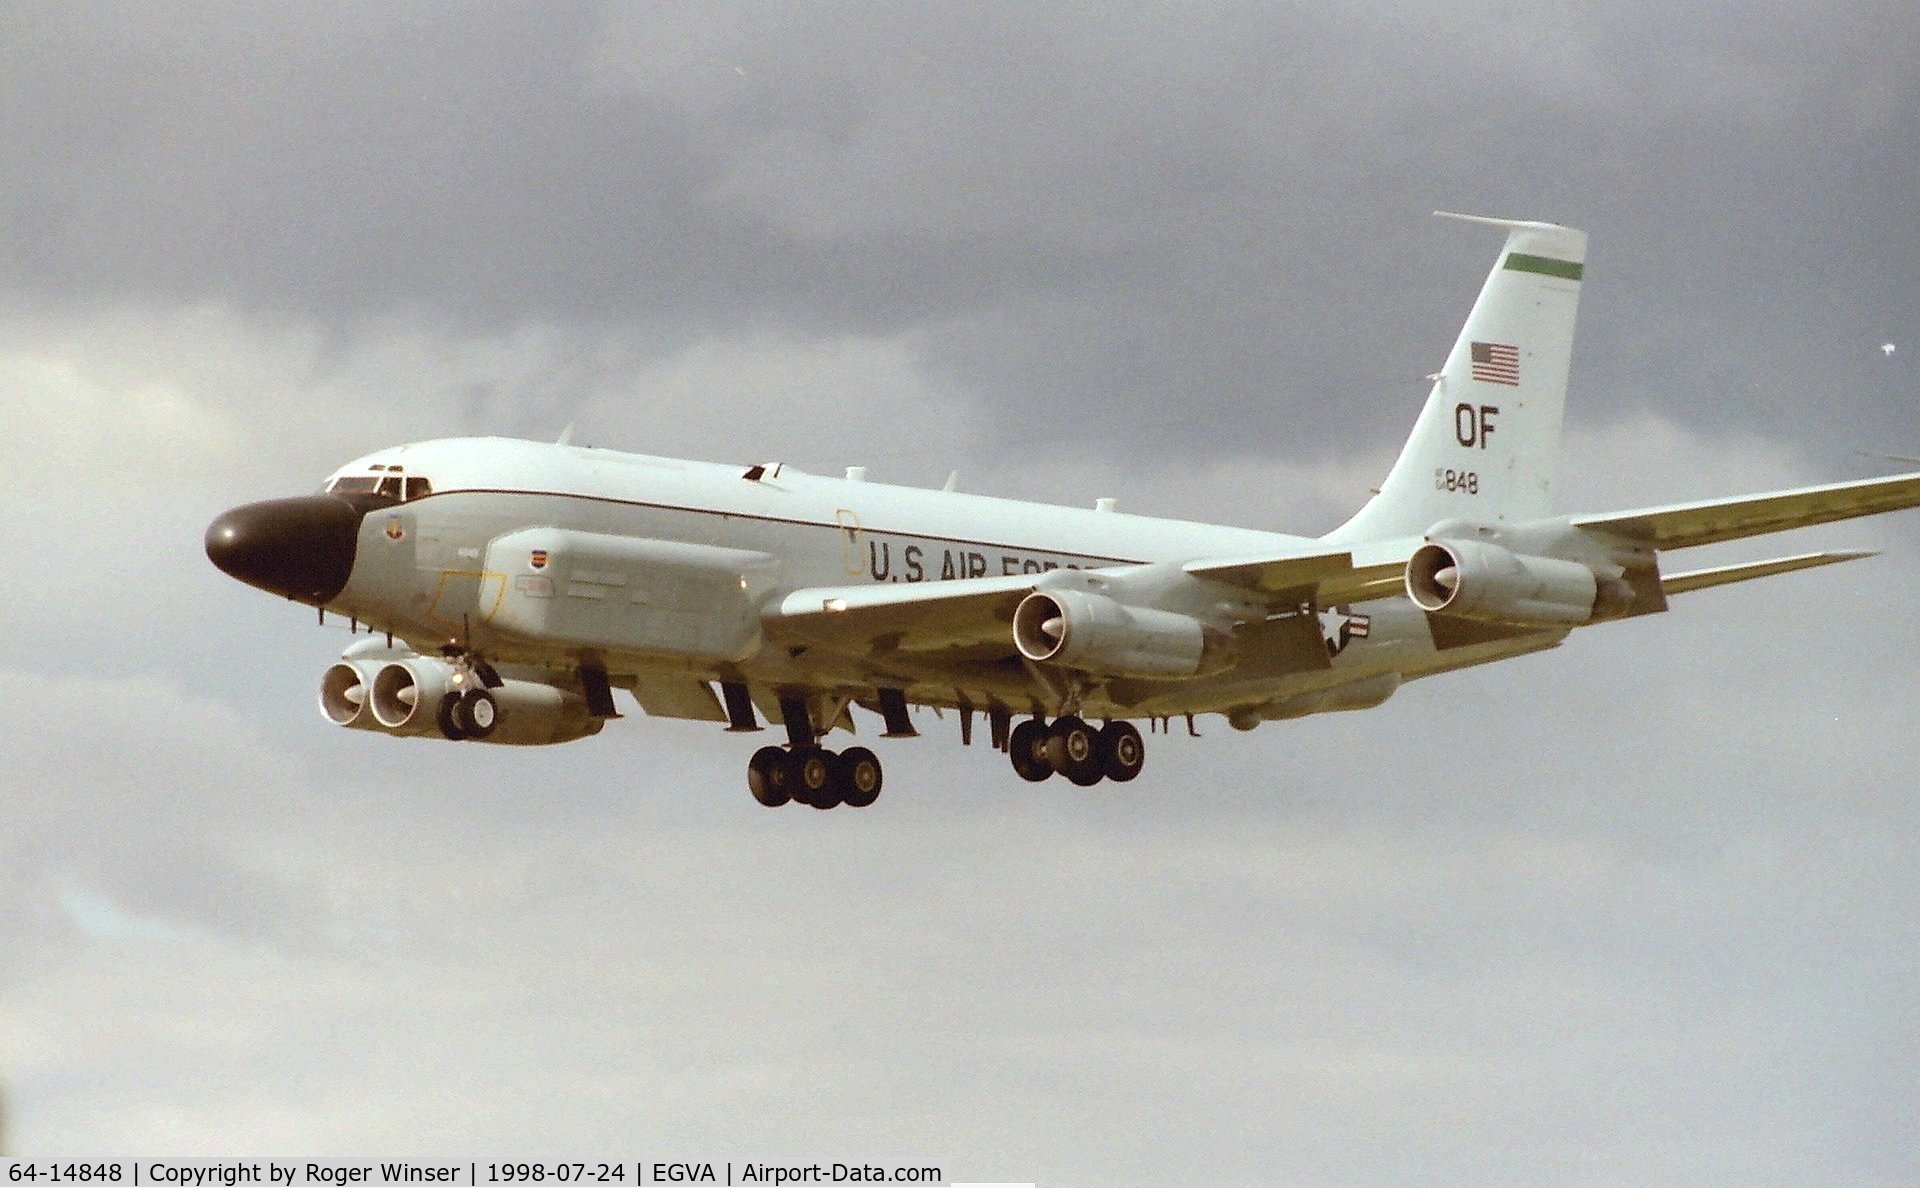 64-14848, 1964 Boeing RC-135V Rivet Joint C/N 18788, USAF Rivet Joint aircraft arriving at RIAT 1998.